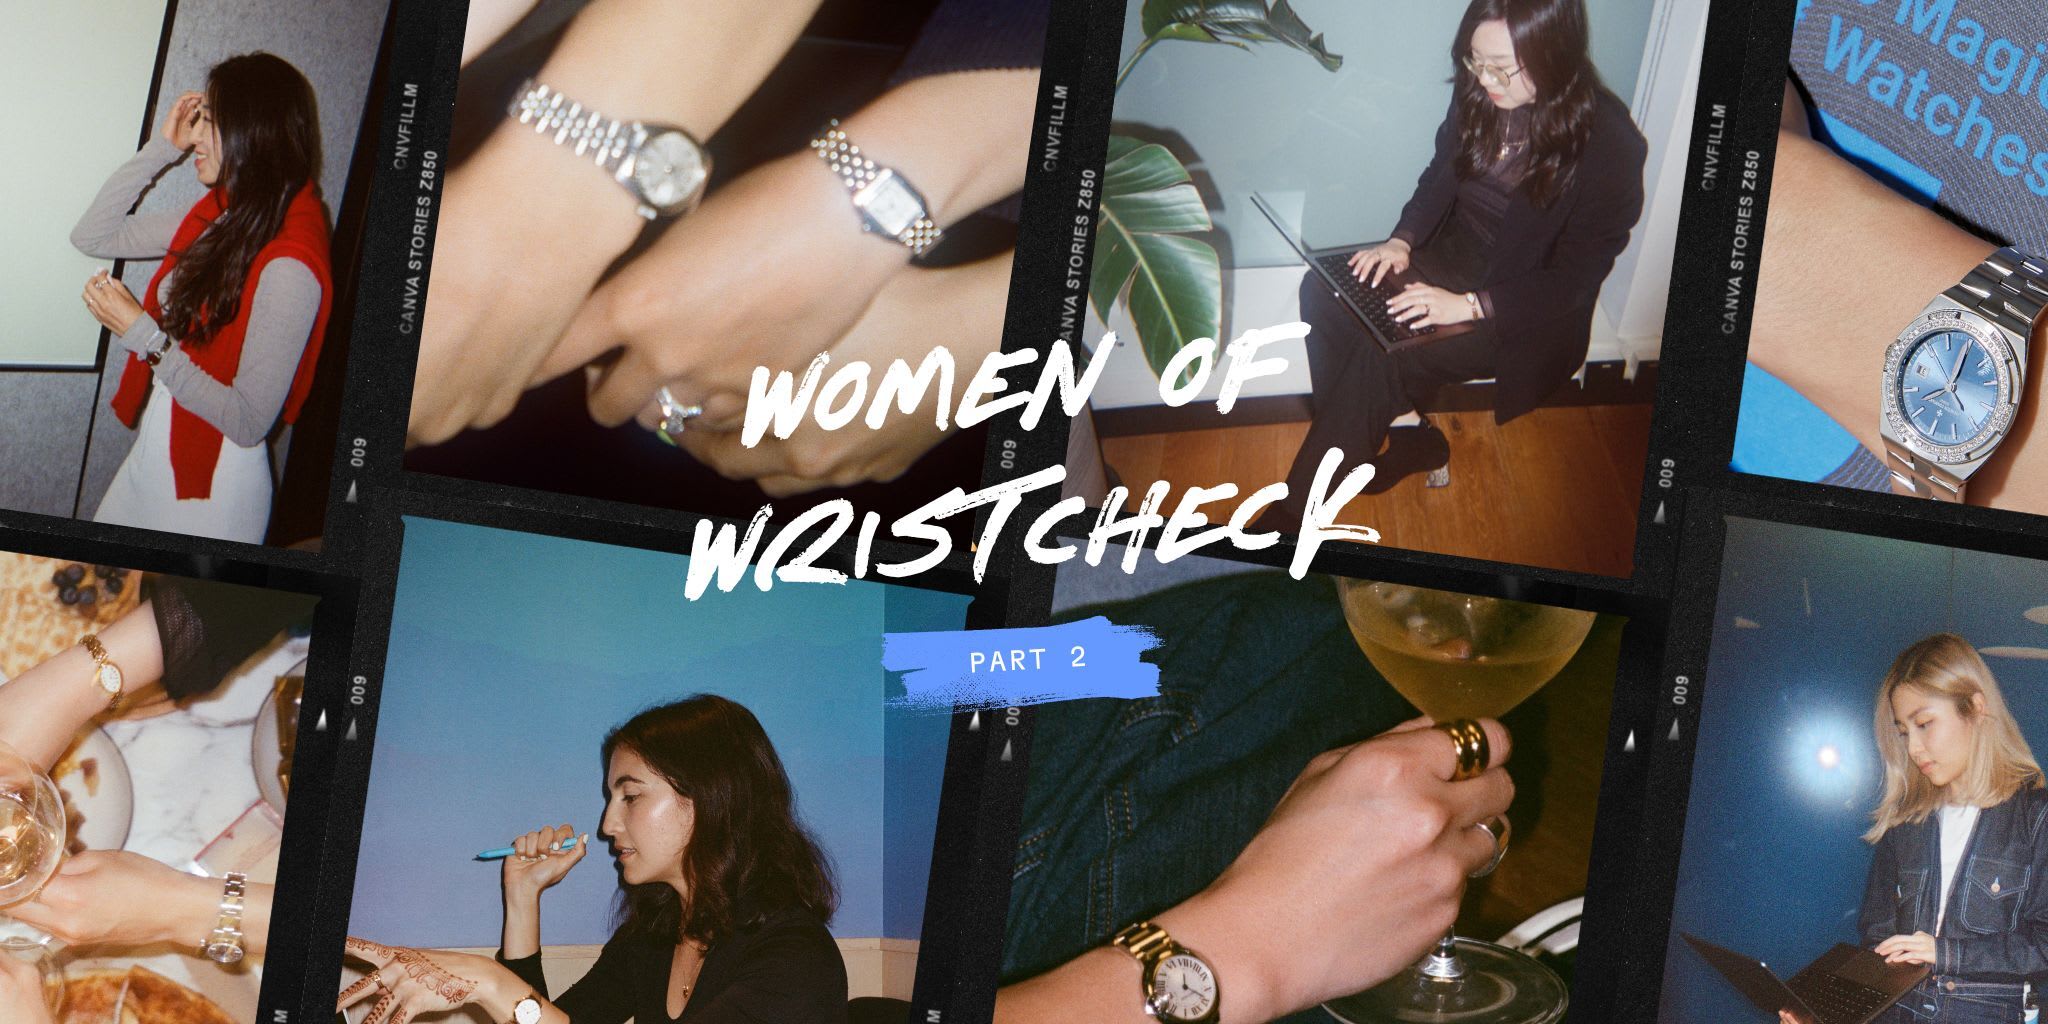 The Women Of Wristcheck(Part 2)